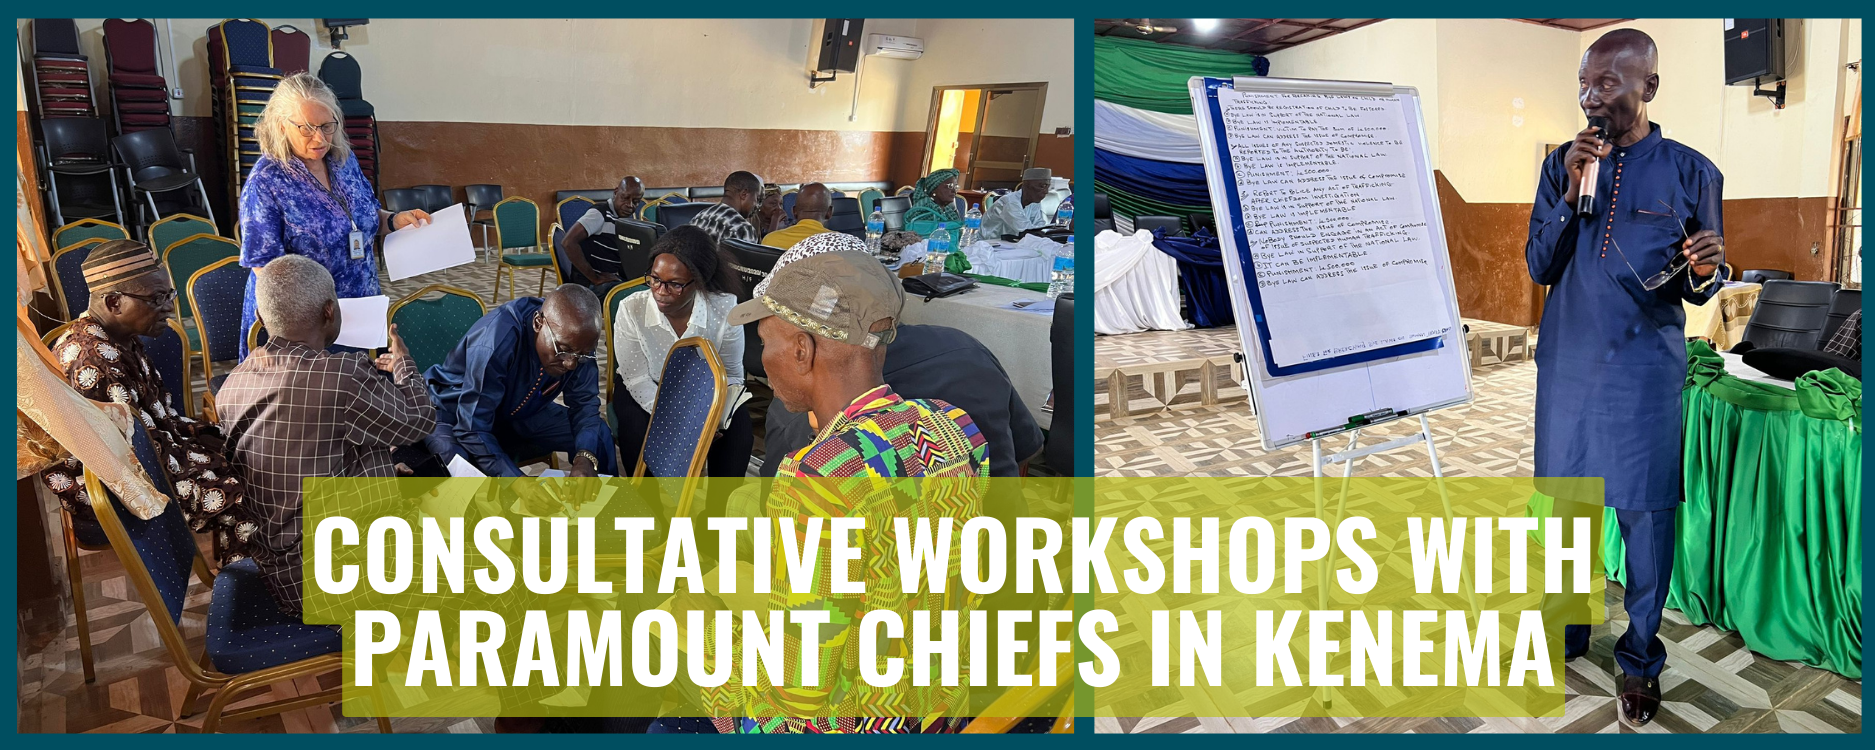 paramount chiefs workshops